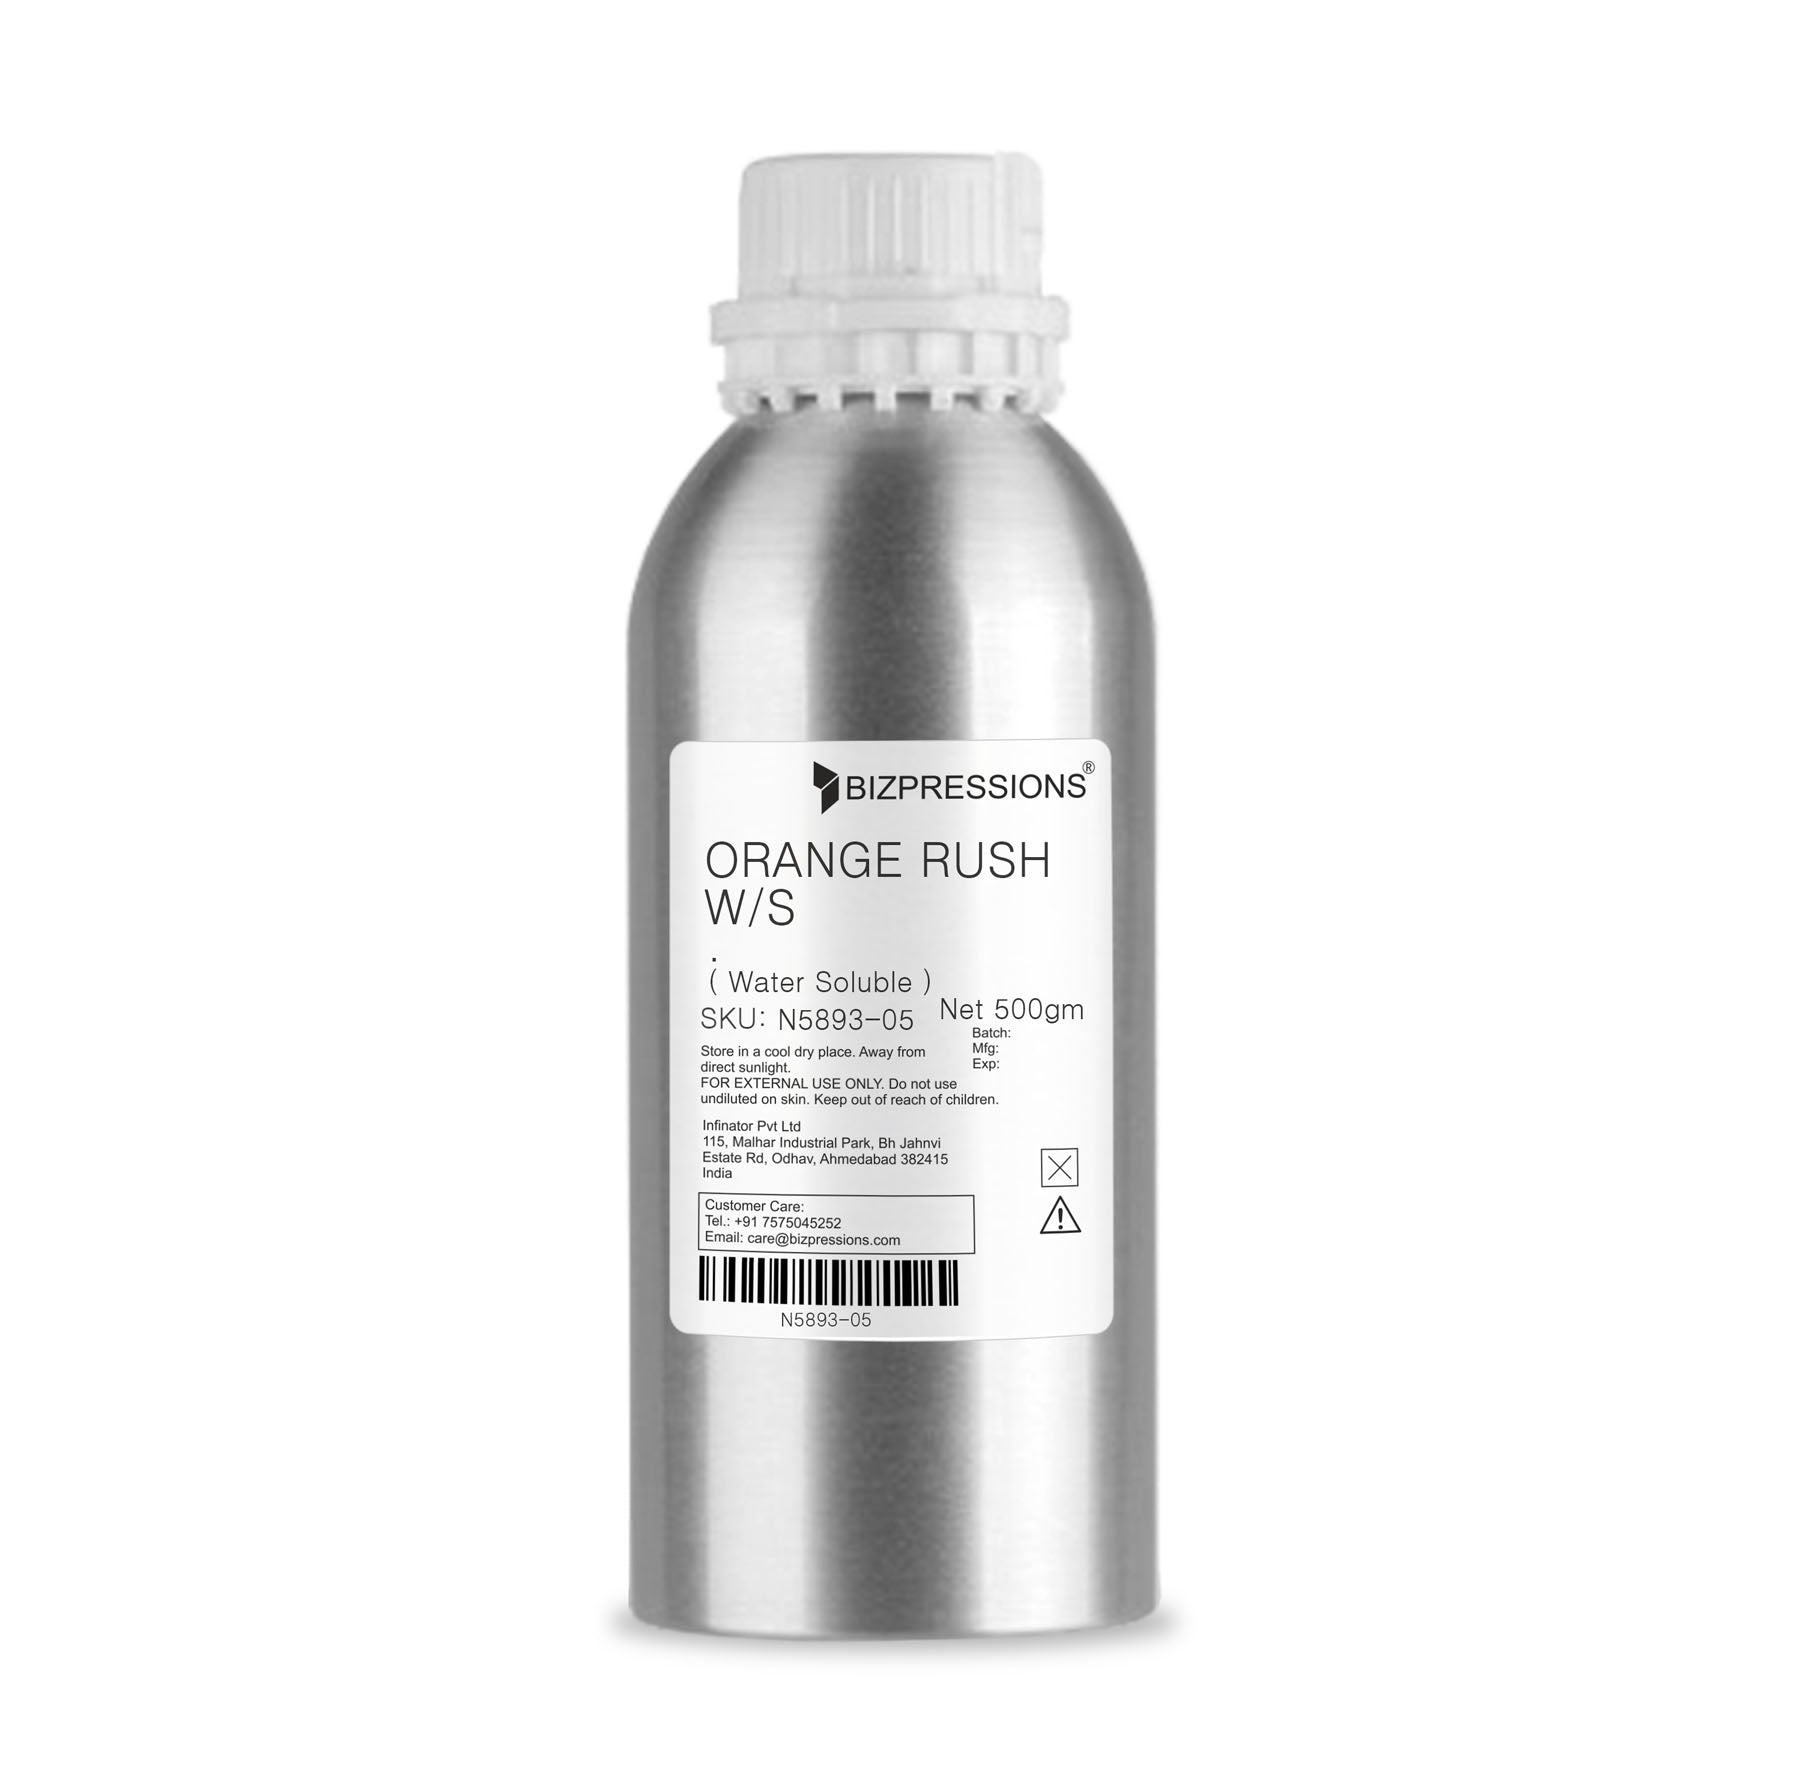 ORANGE RUSH W/S - Fragrance ( Water Soluble ) - 500 gm